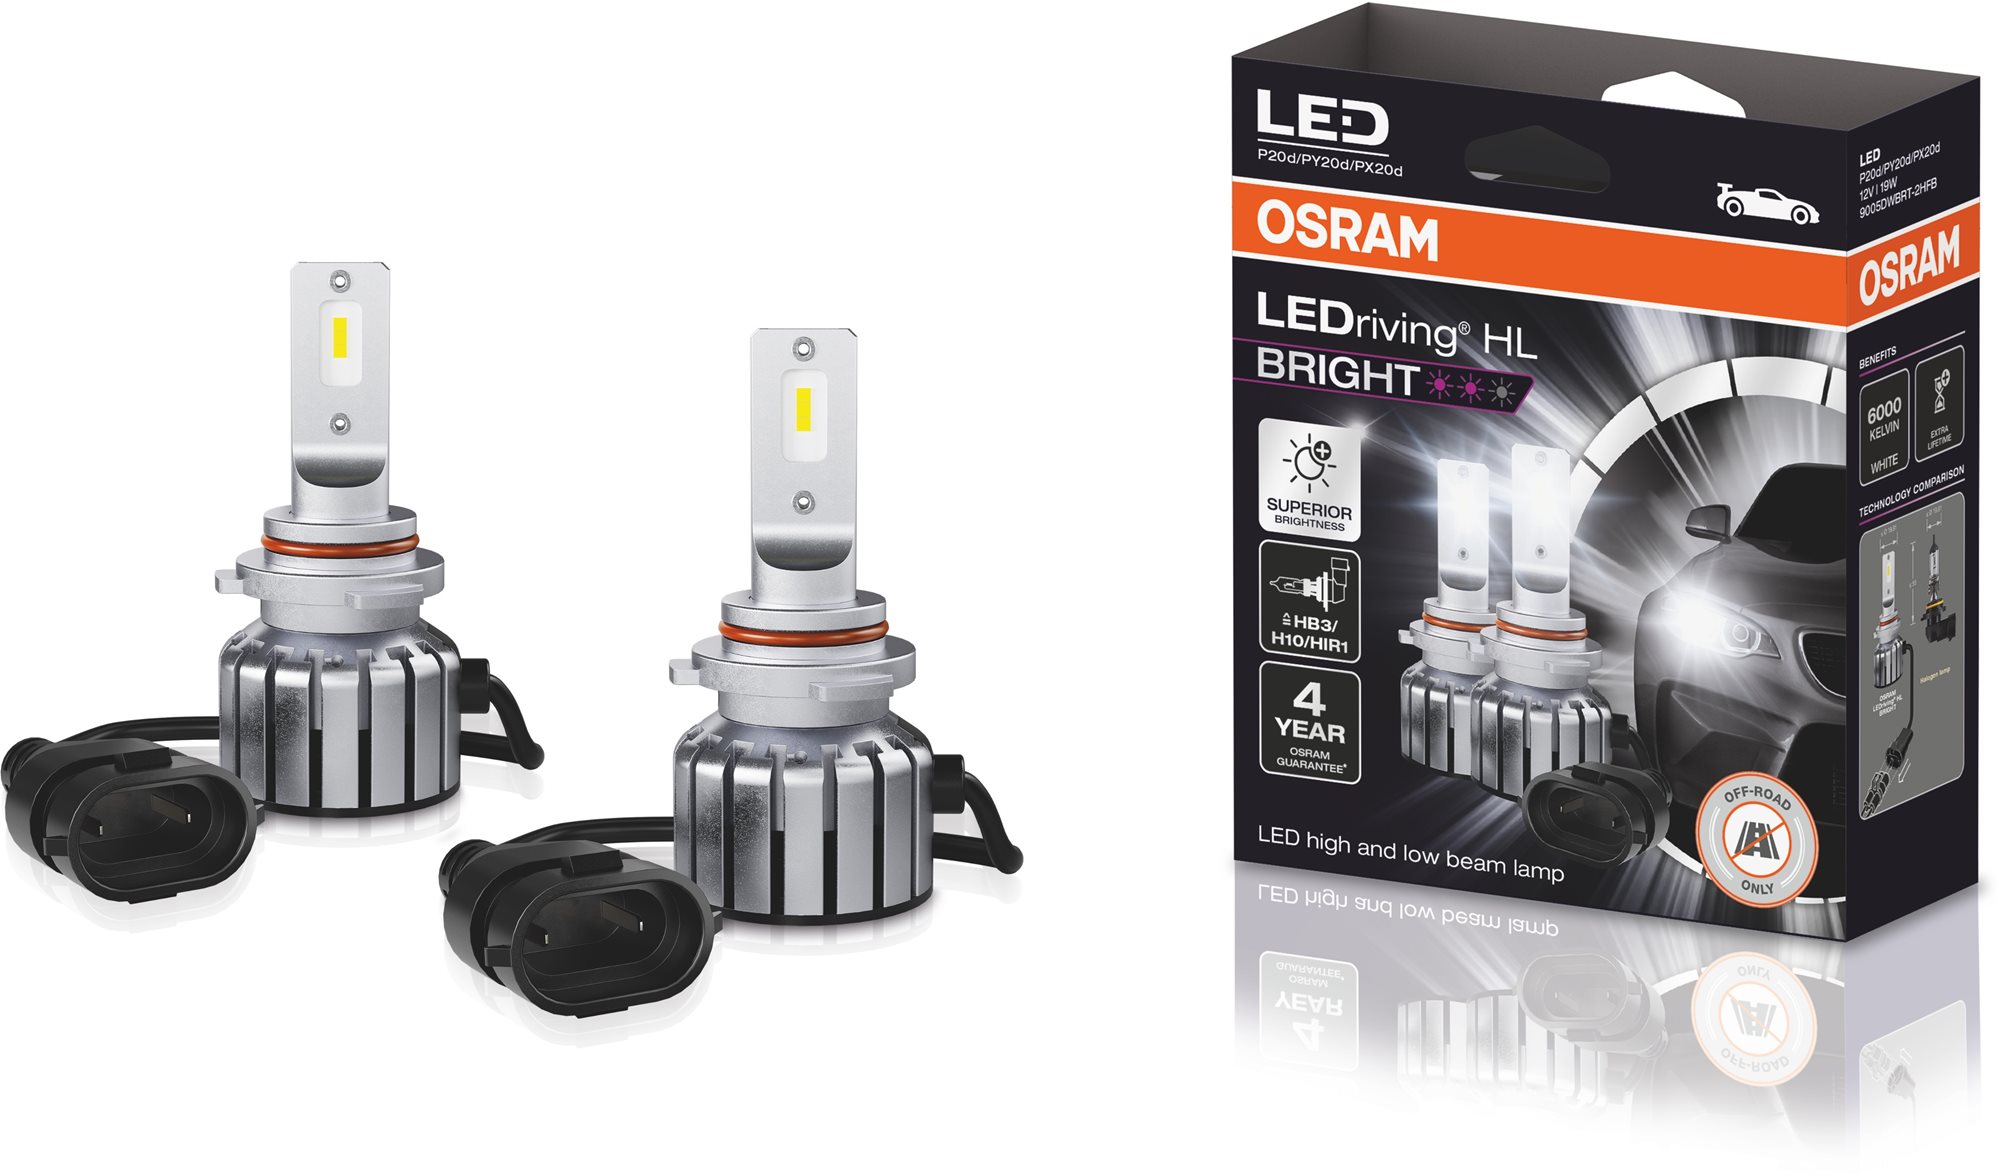 OSRAM LEDriving HL BRIGHT +300% 